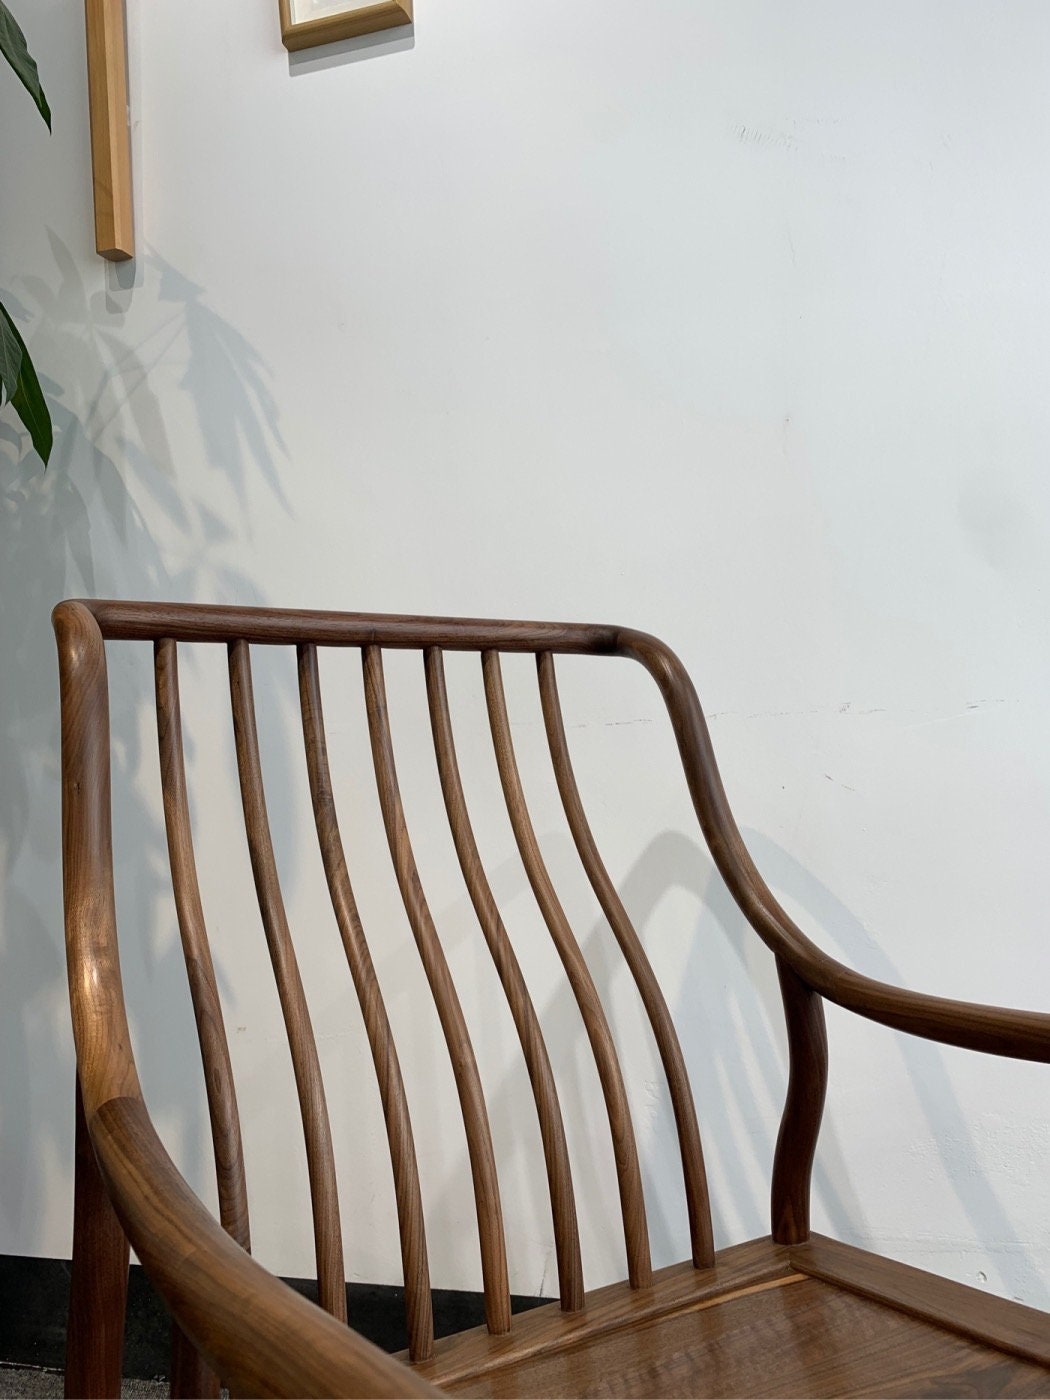 Solid black walnut wood rocking chair, Mid Century Modern black walnut Chair, Dining chair